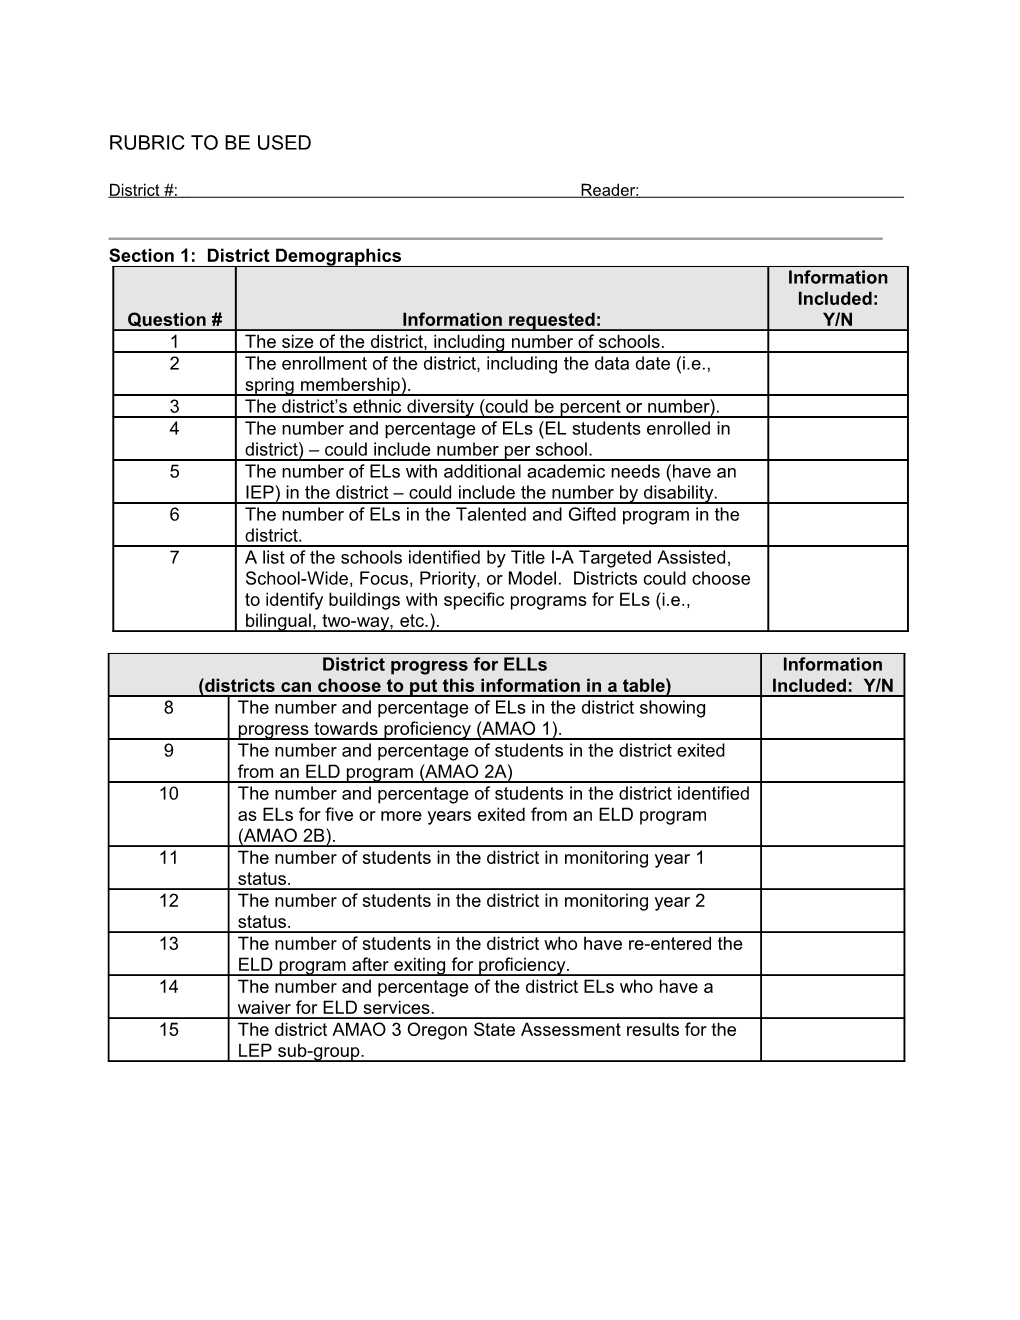 Section 2: School District Information on Program Goals (OCR Step 1)